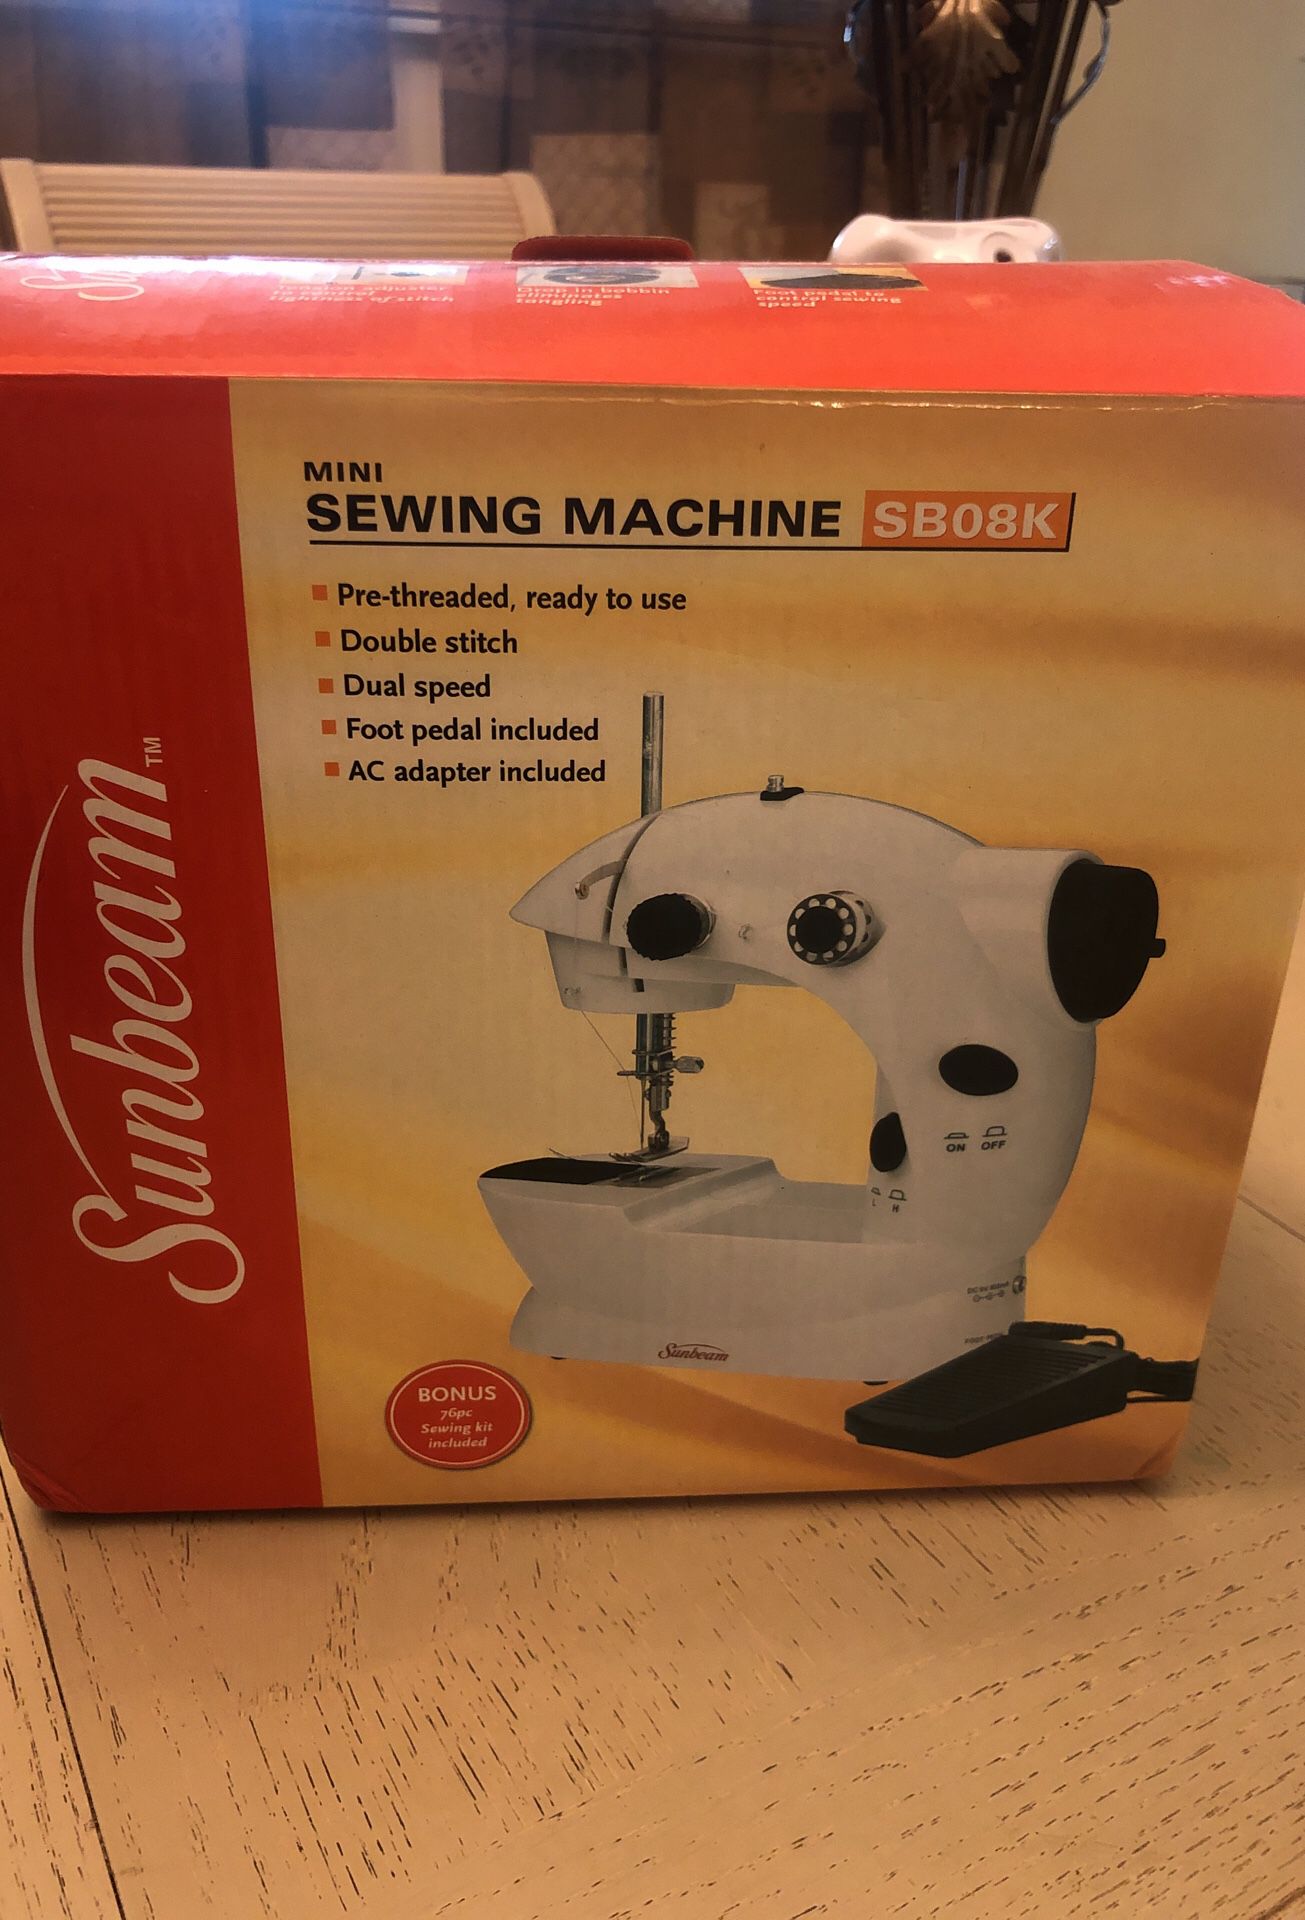 Mini sewing machine SB08k white